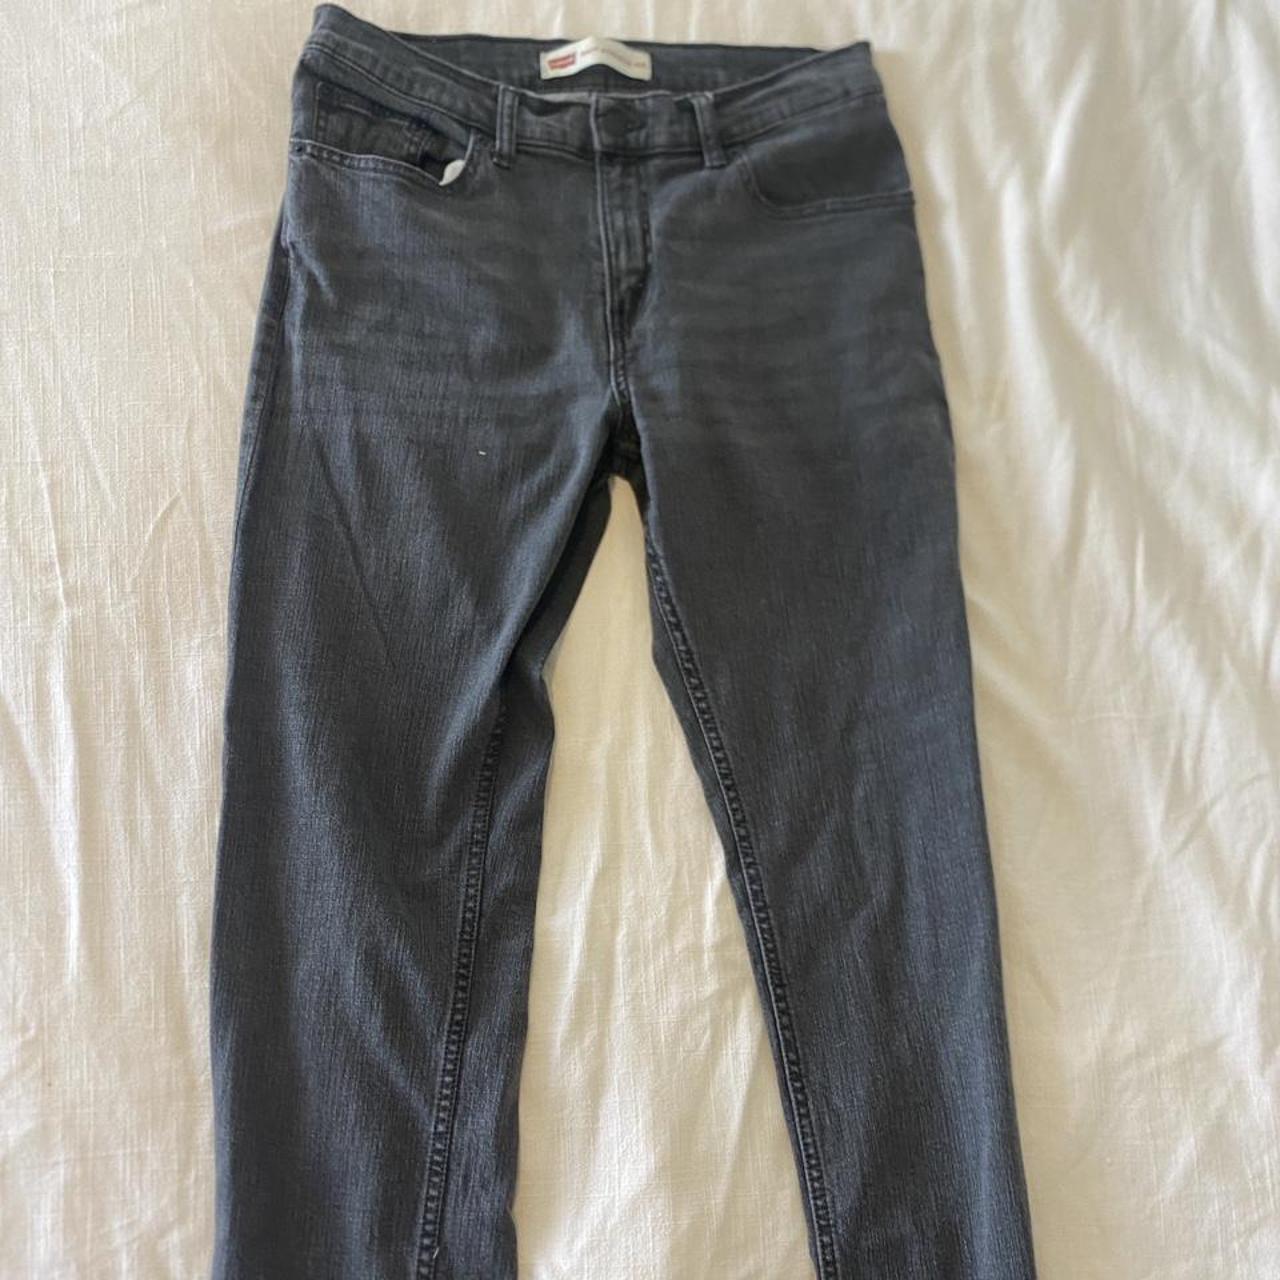 Levi’s 541 Athletic fit W29” L29” 18REG Awesome jeans - Depop